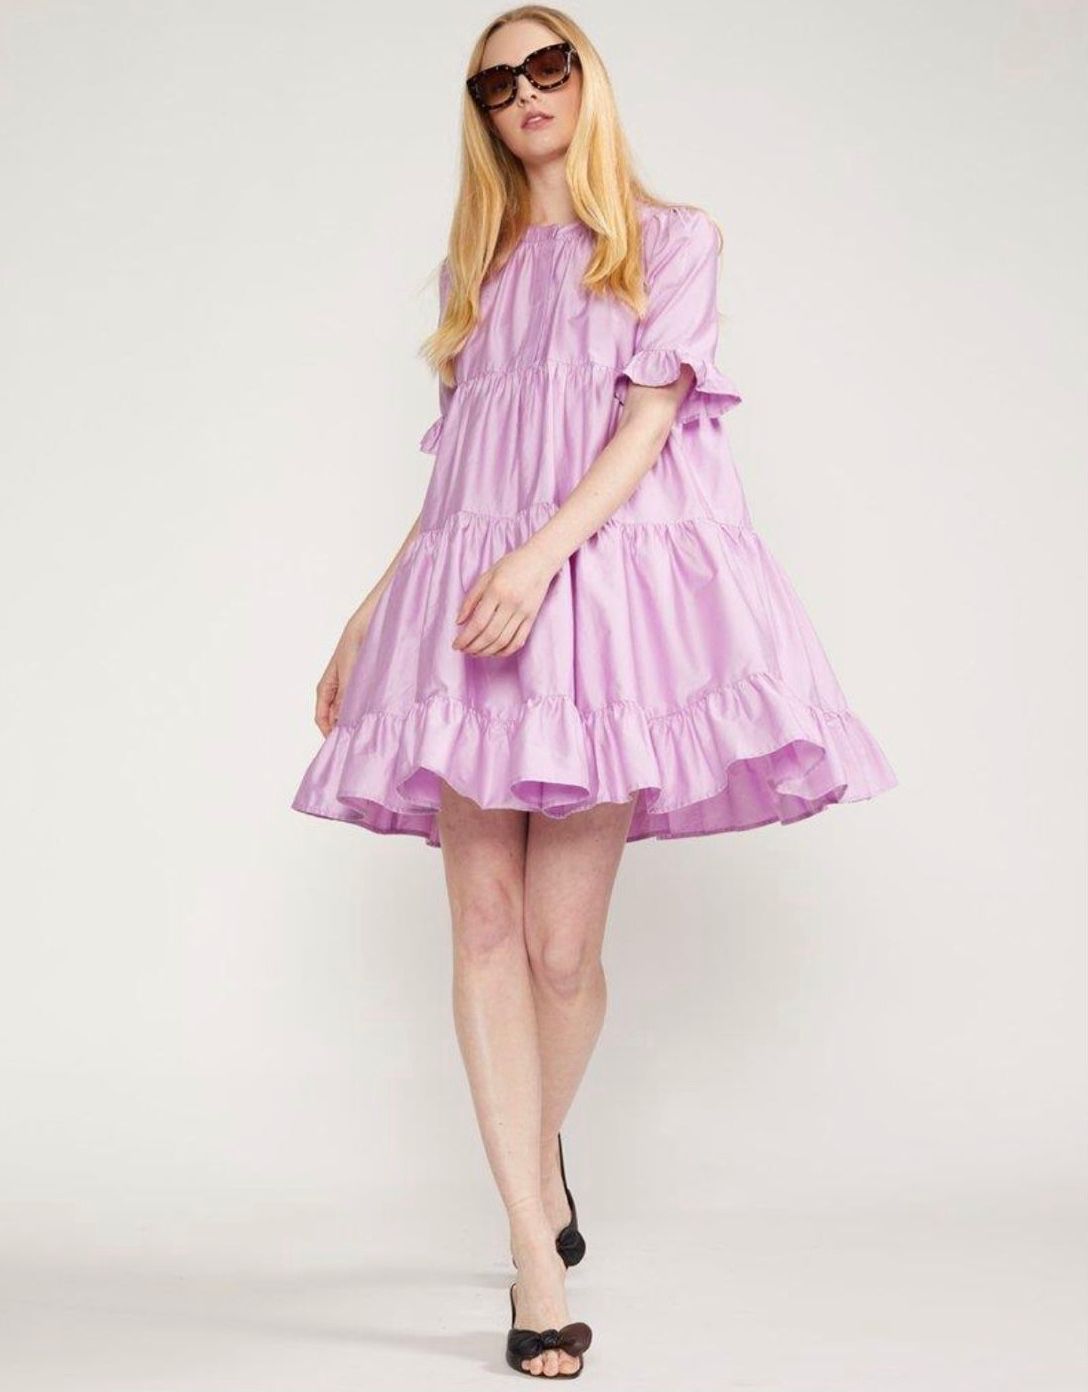 Elegant Pleated Mini Dress with Ruffles